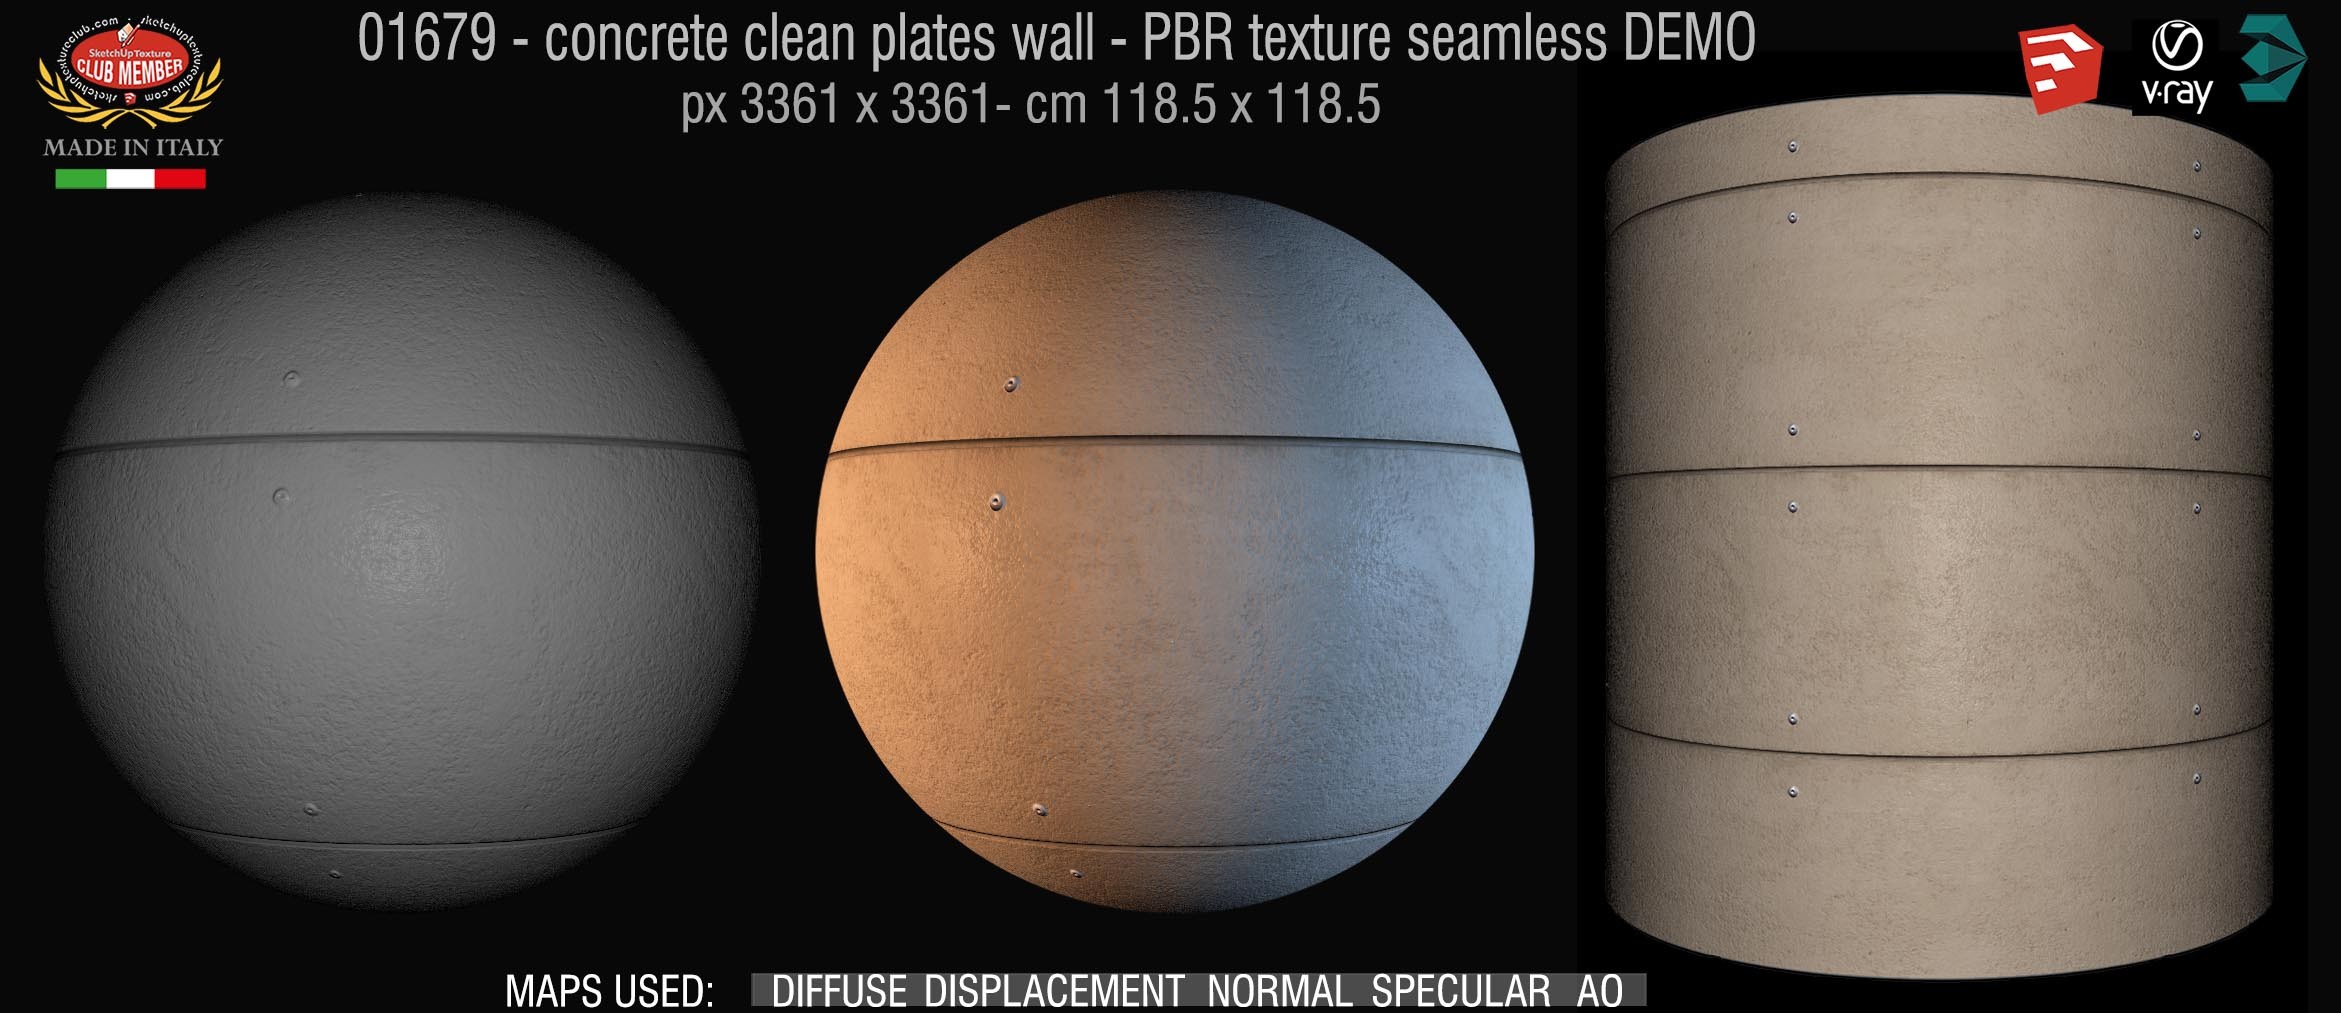 01679 concrete clean plates wall PBR texture seamless DEMO